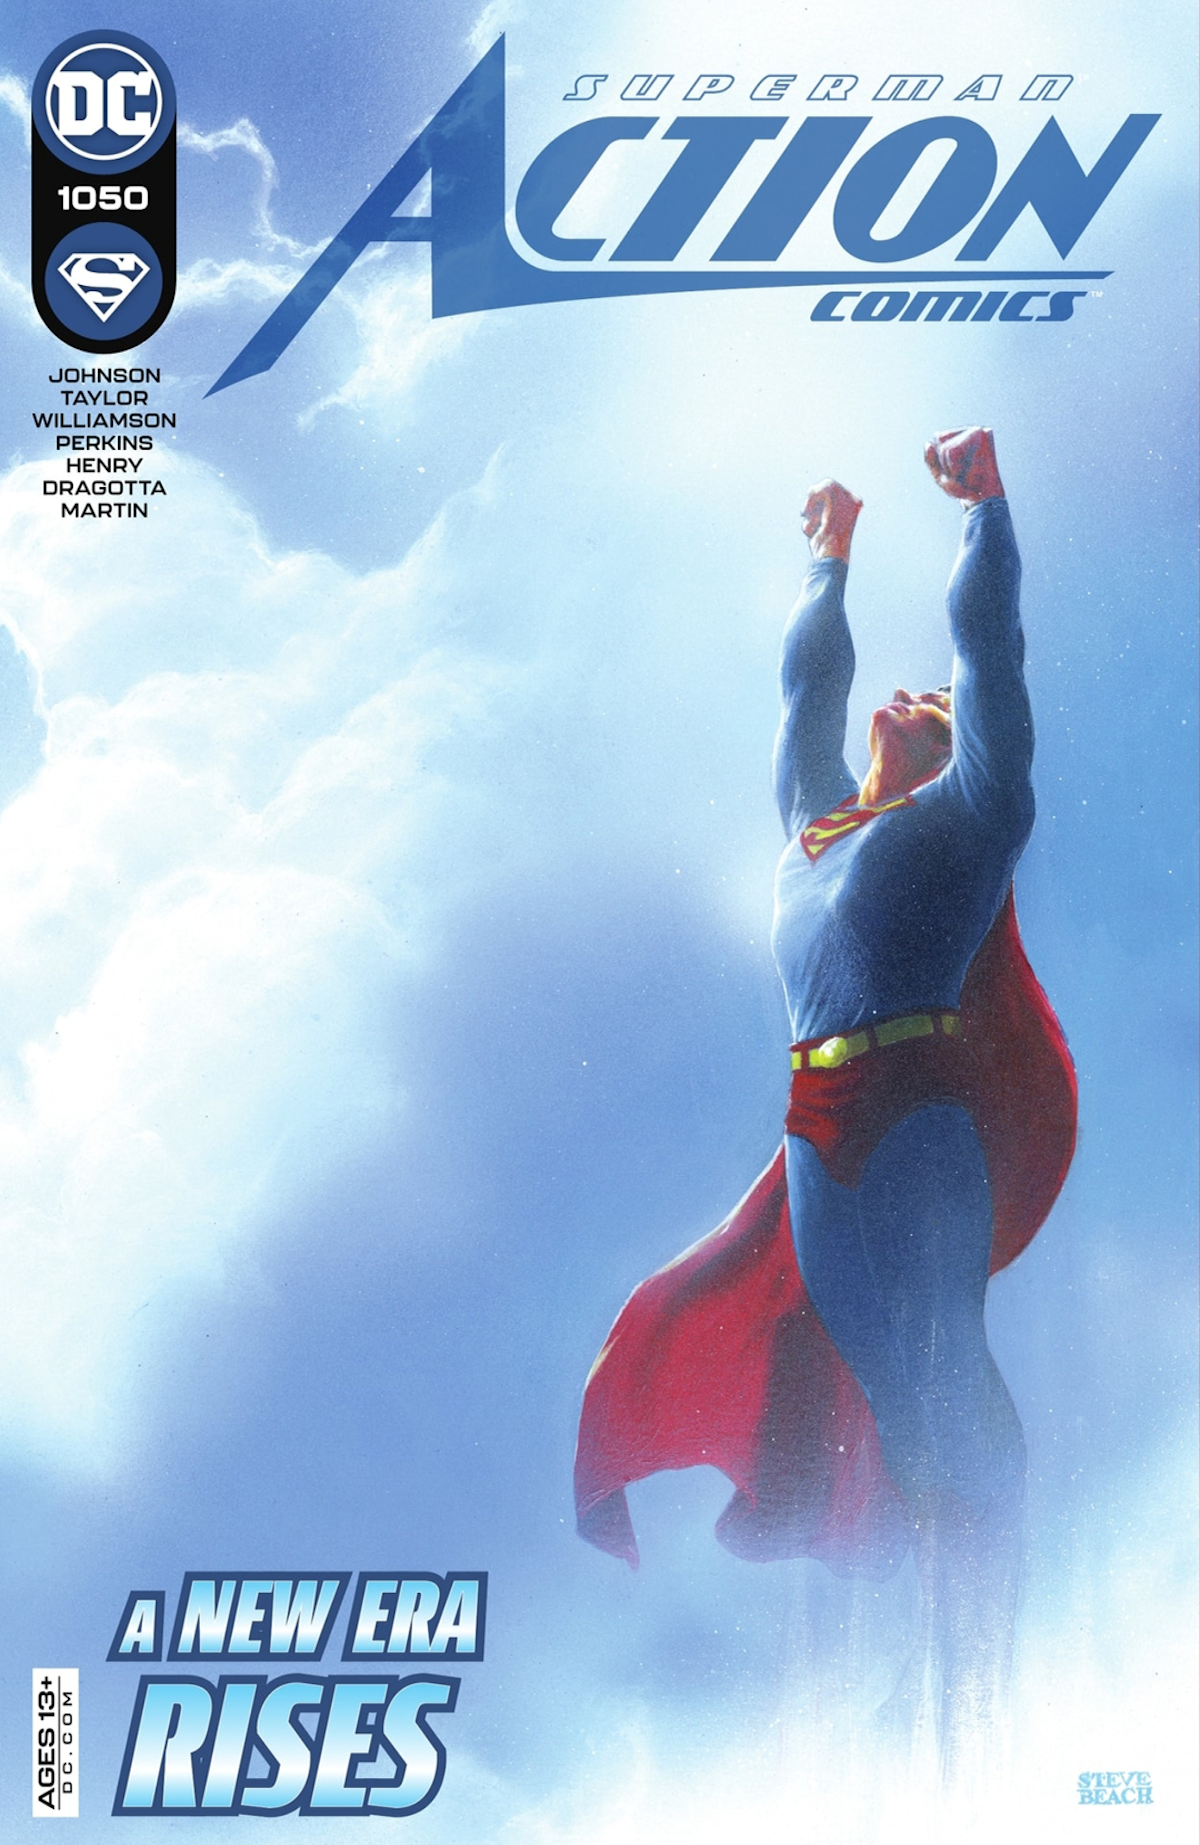 Action Comics 1050 (Cover A)